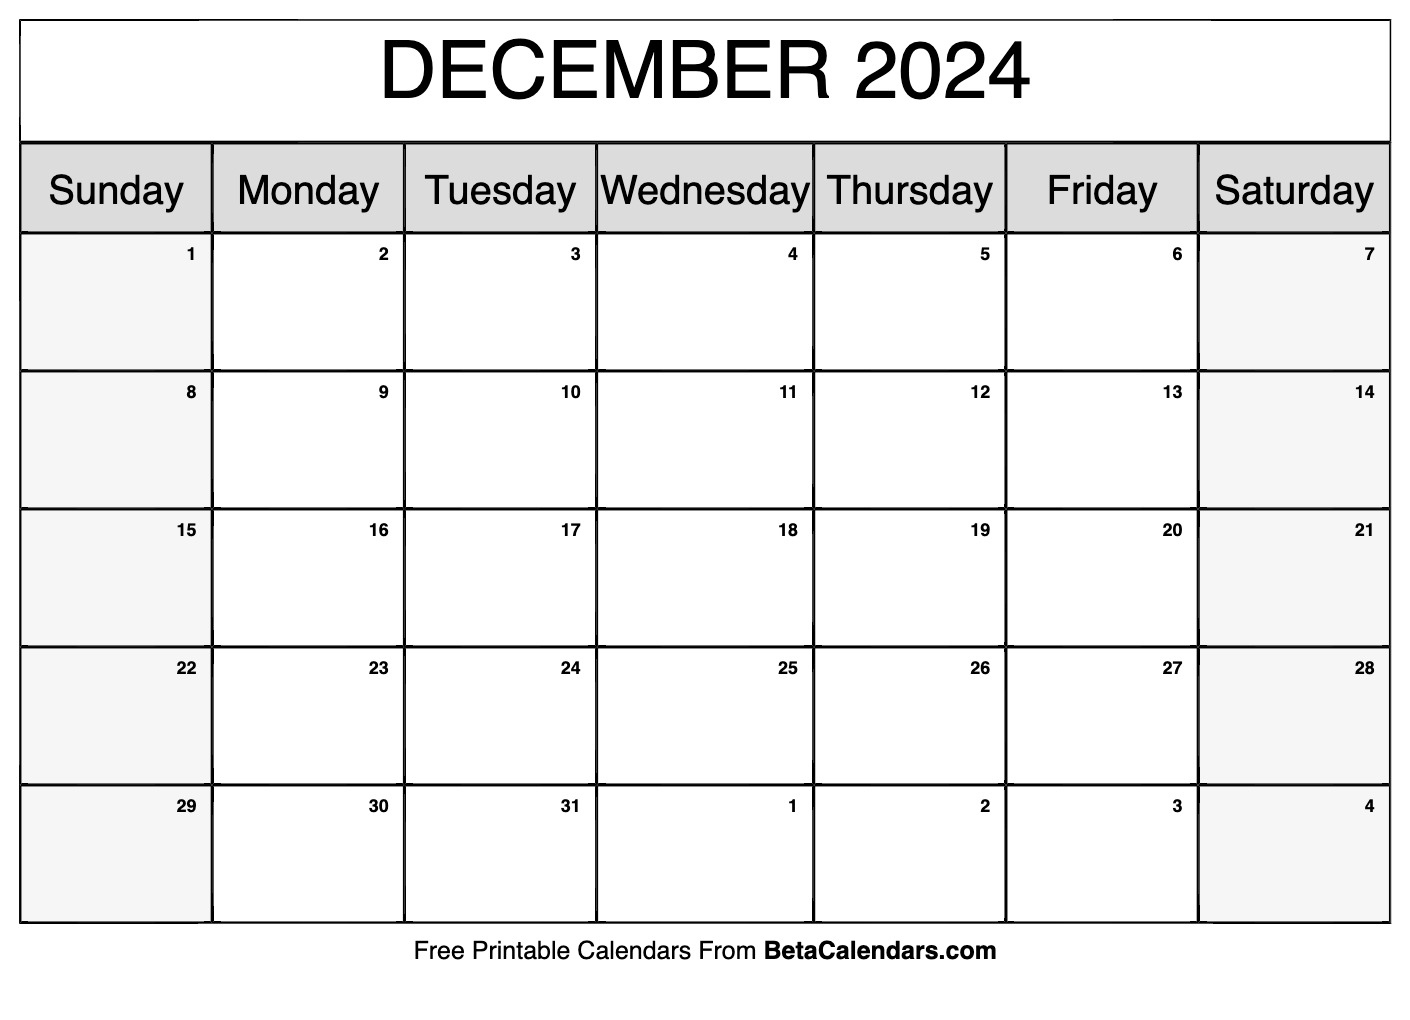 Free Printable December 2024 Calendar within Free Printable Blank Calendar December 2024